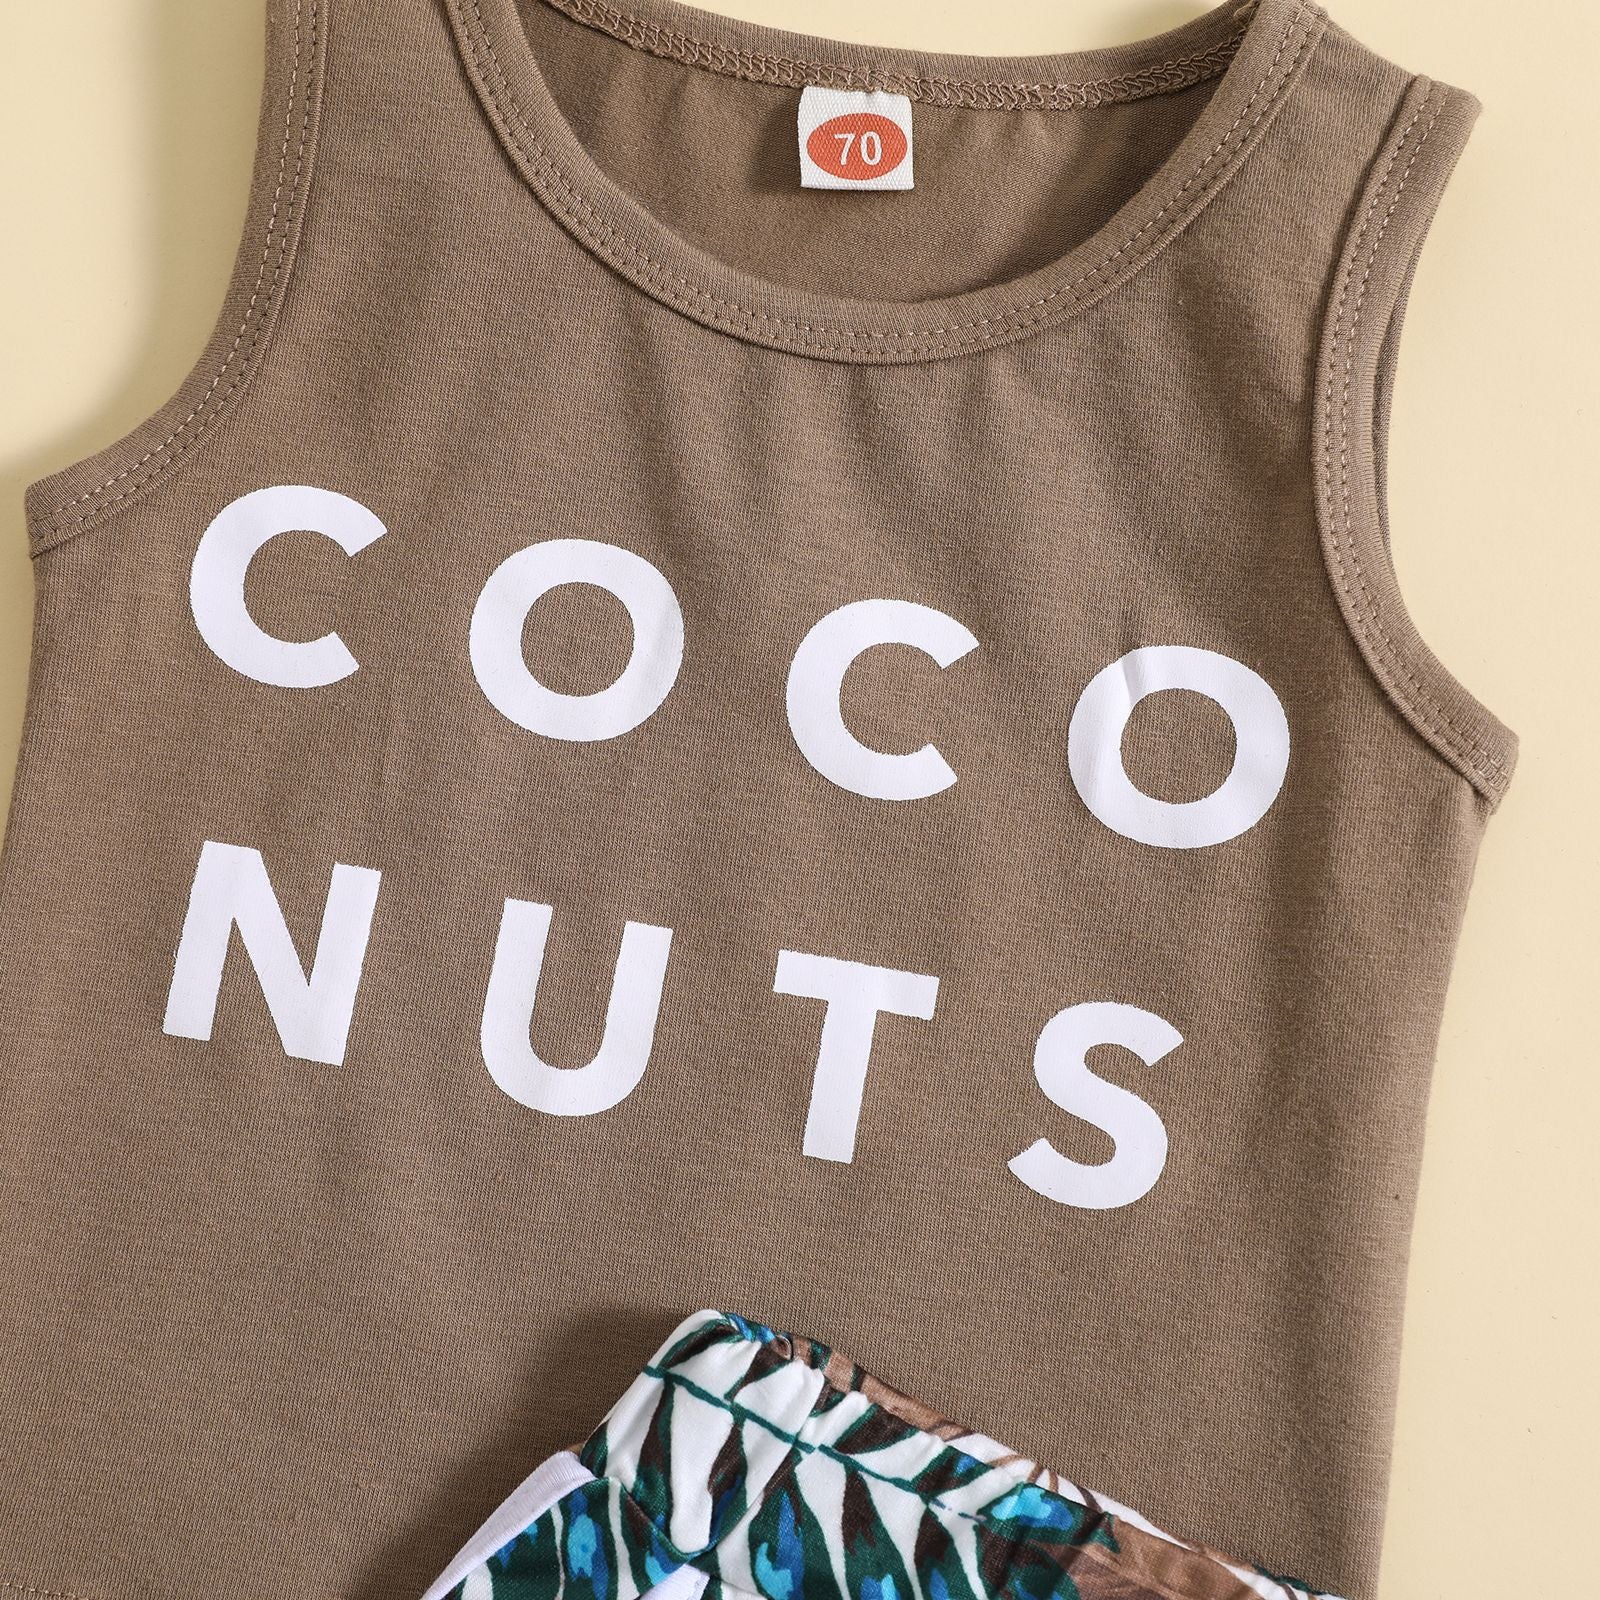 Coco Nuts Summer Vest & Short Set